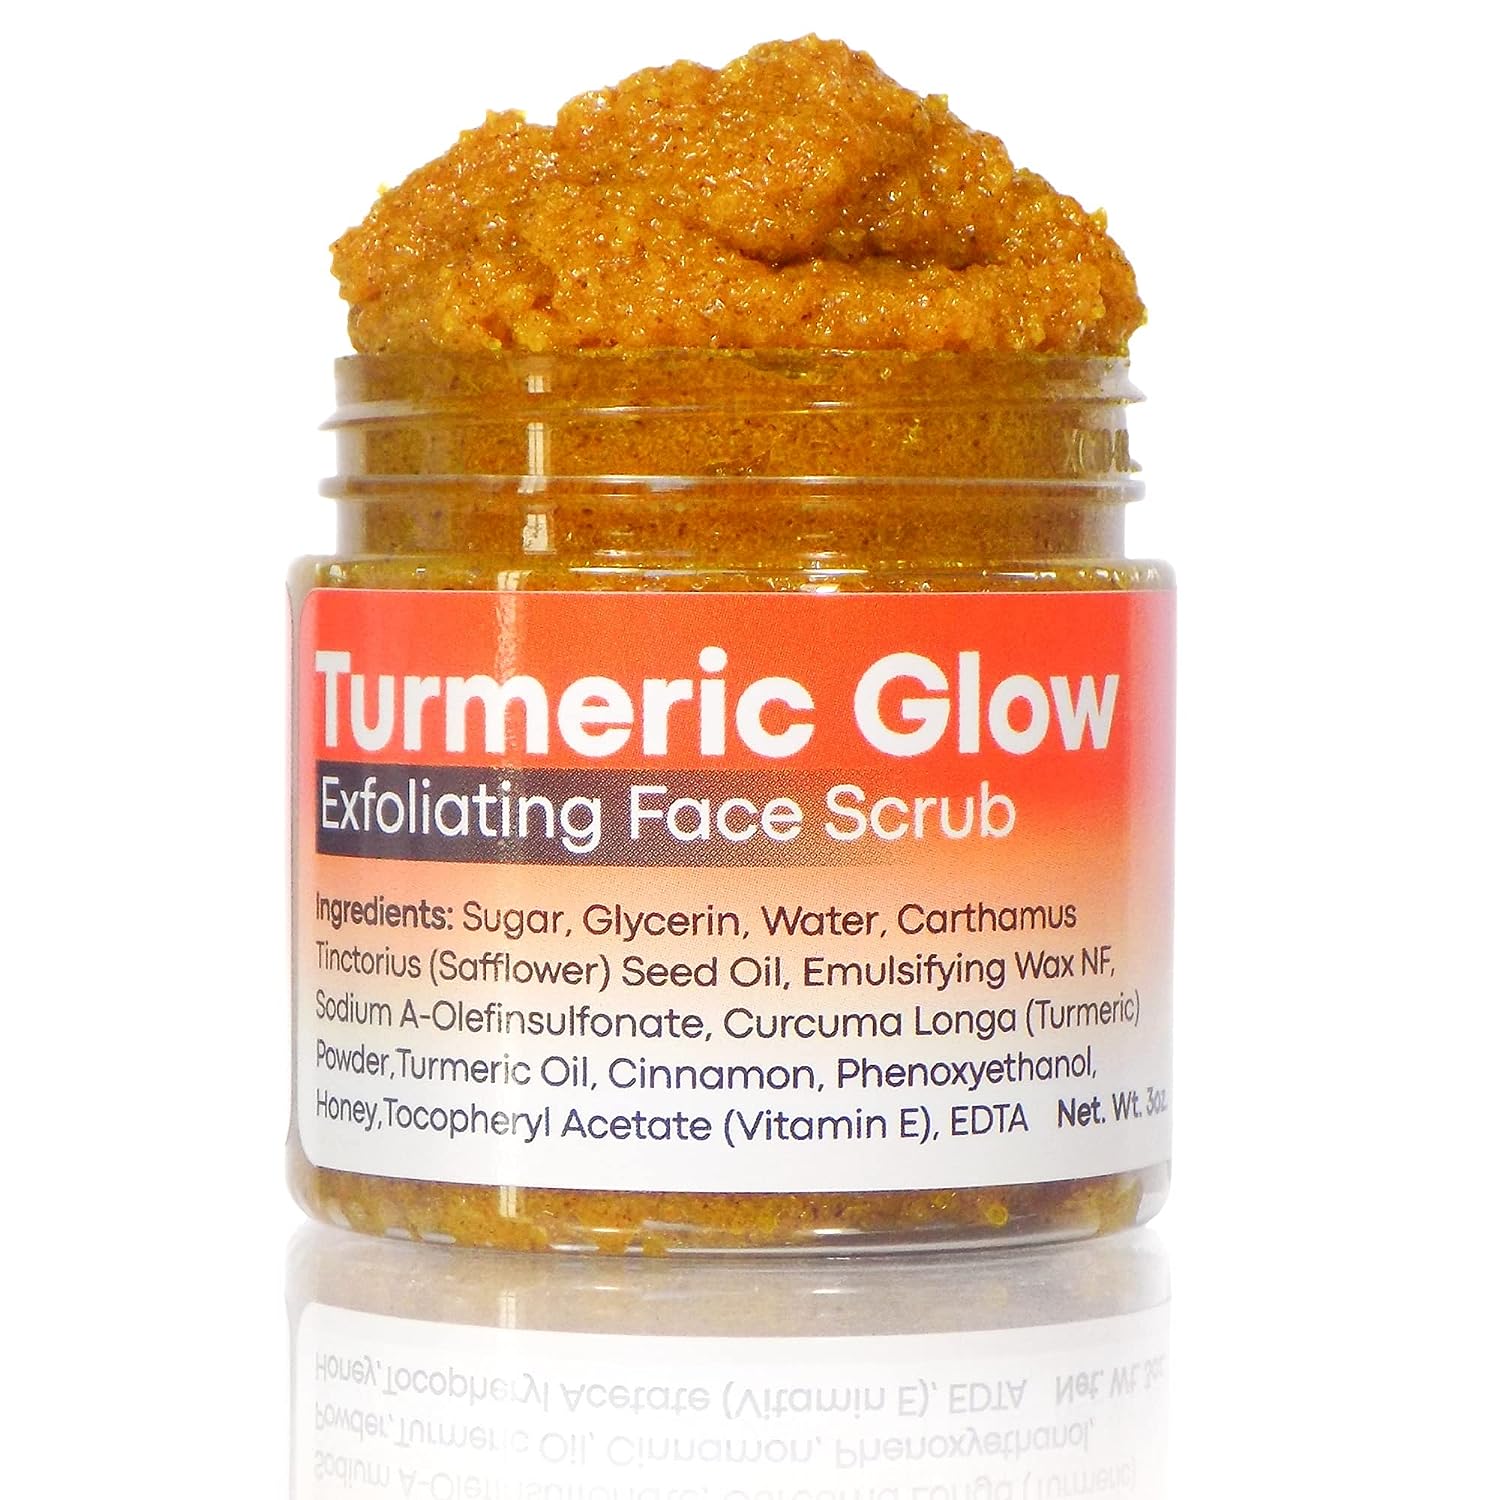 Brightening Turmeric Scrub With Honey, Cinnamon & Vitamin E - Fragrance Free Exfoliating Face Sugar Scrub - For Acne, Hyperpigmentation & Dullness - 3 Ounces